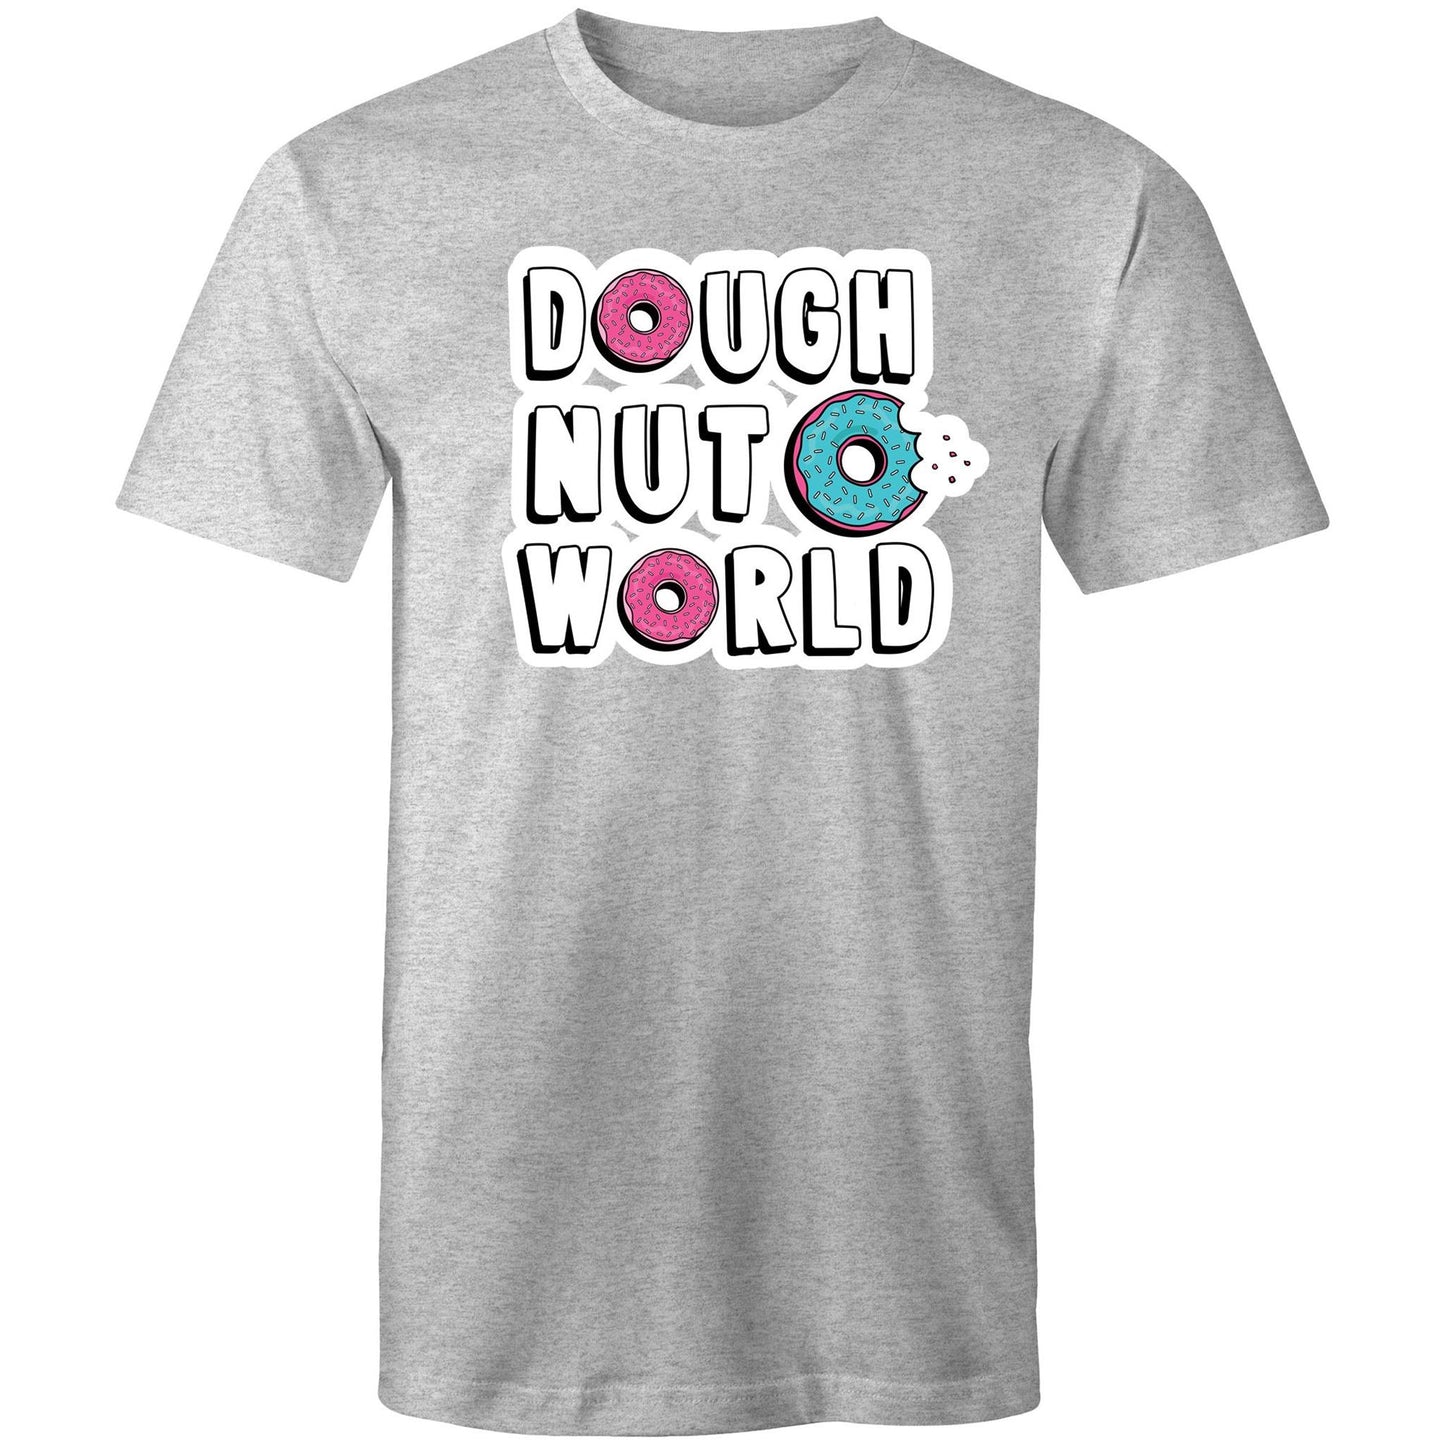 Doughnut World Logo - Mens T-Shirt